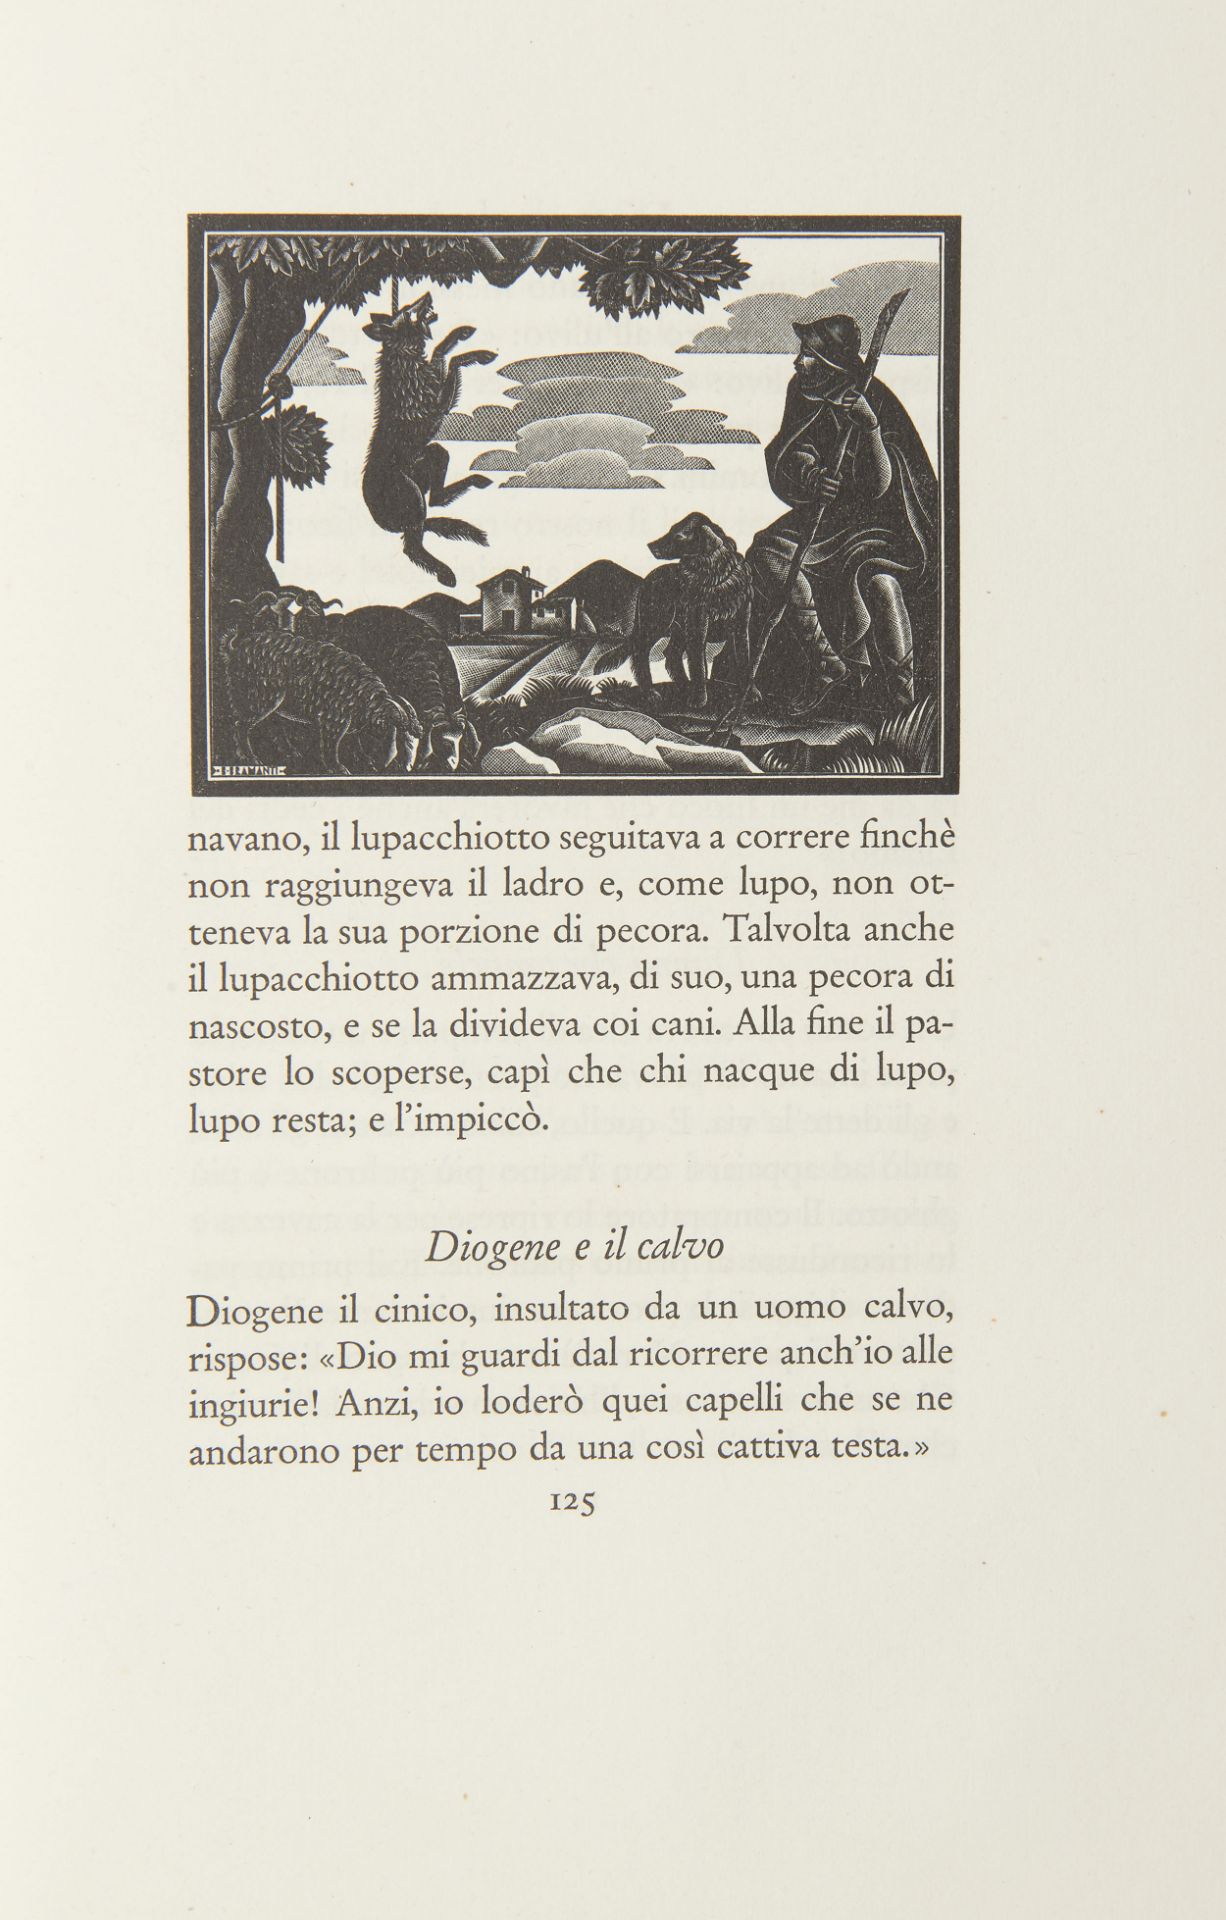 VITERBO, Dario (1890-1961). The Book of Tobias. Verona: Officina Bodoni, 1952.